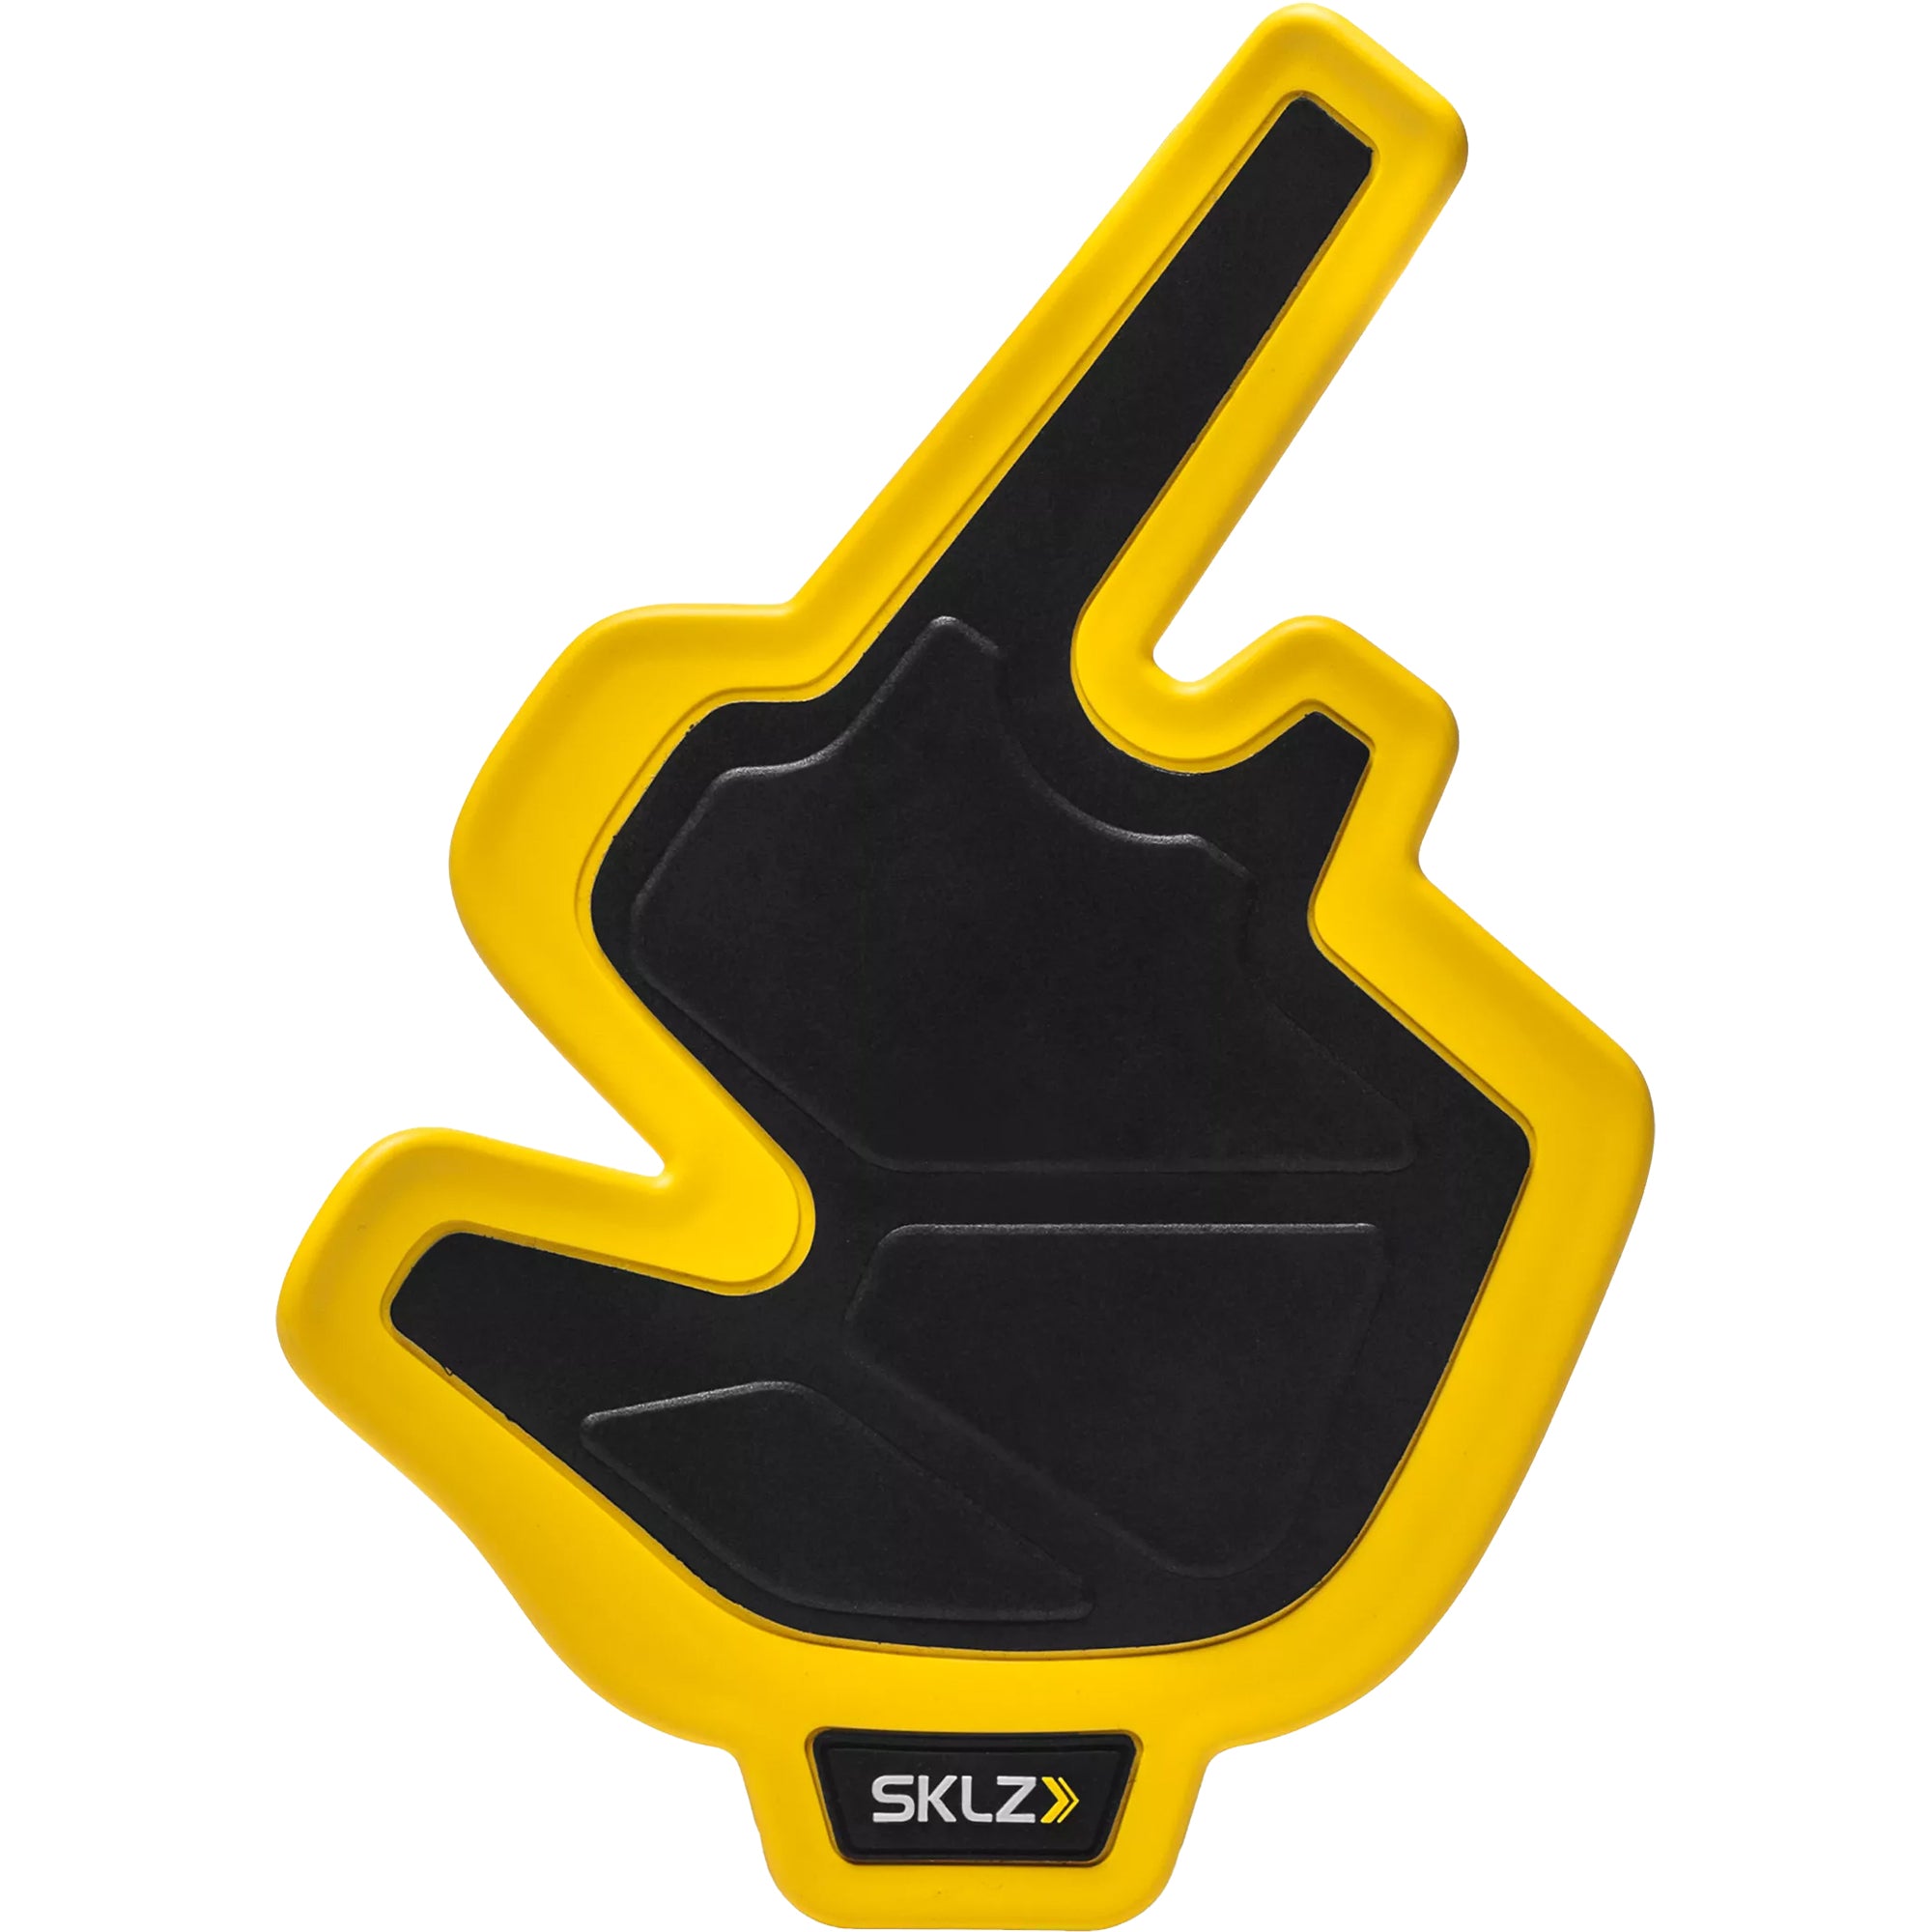 SKLZ Adult Fielding Hands Baseball/Softball Training Aid - Black/Yellow SKLZ